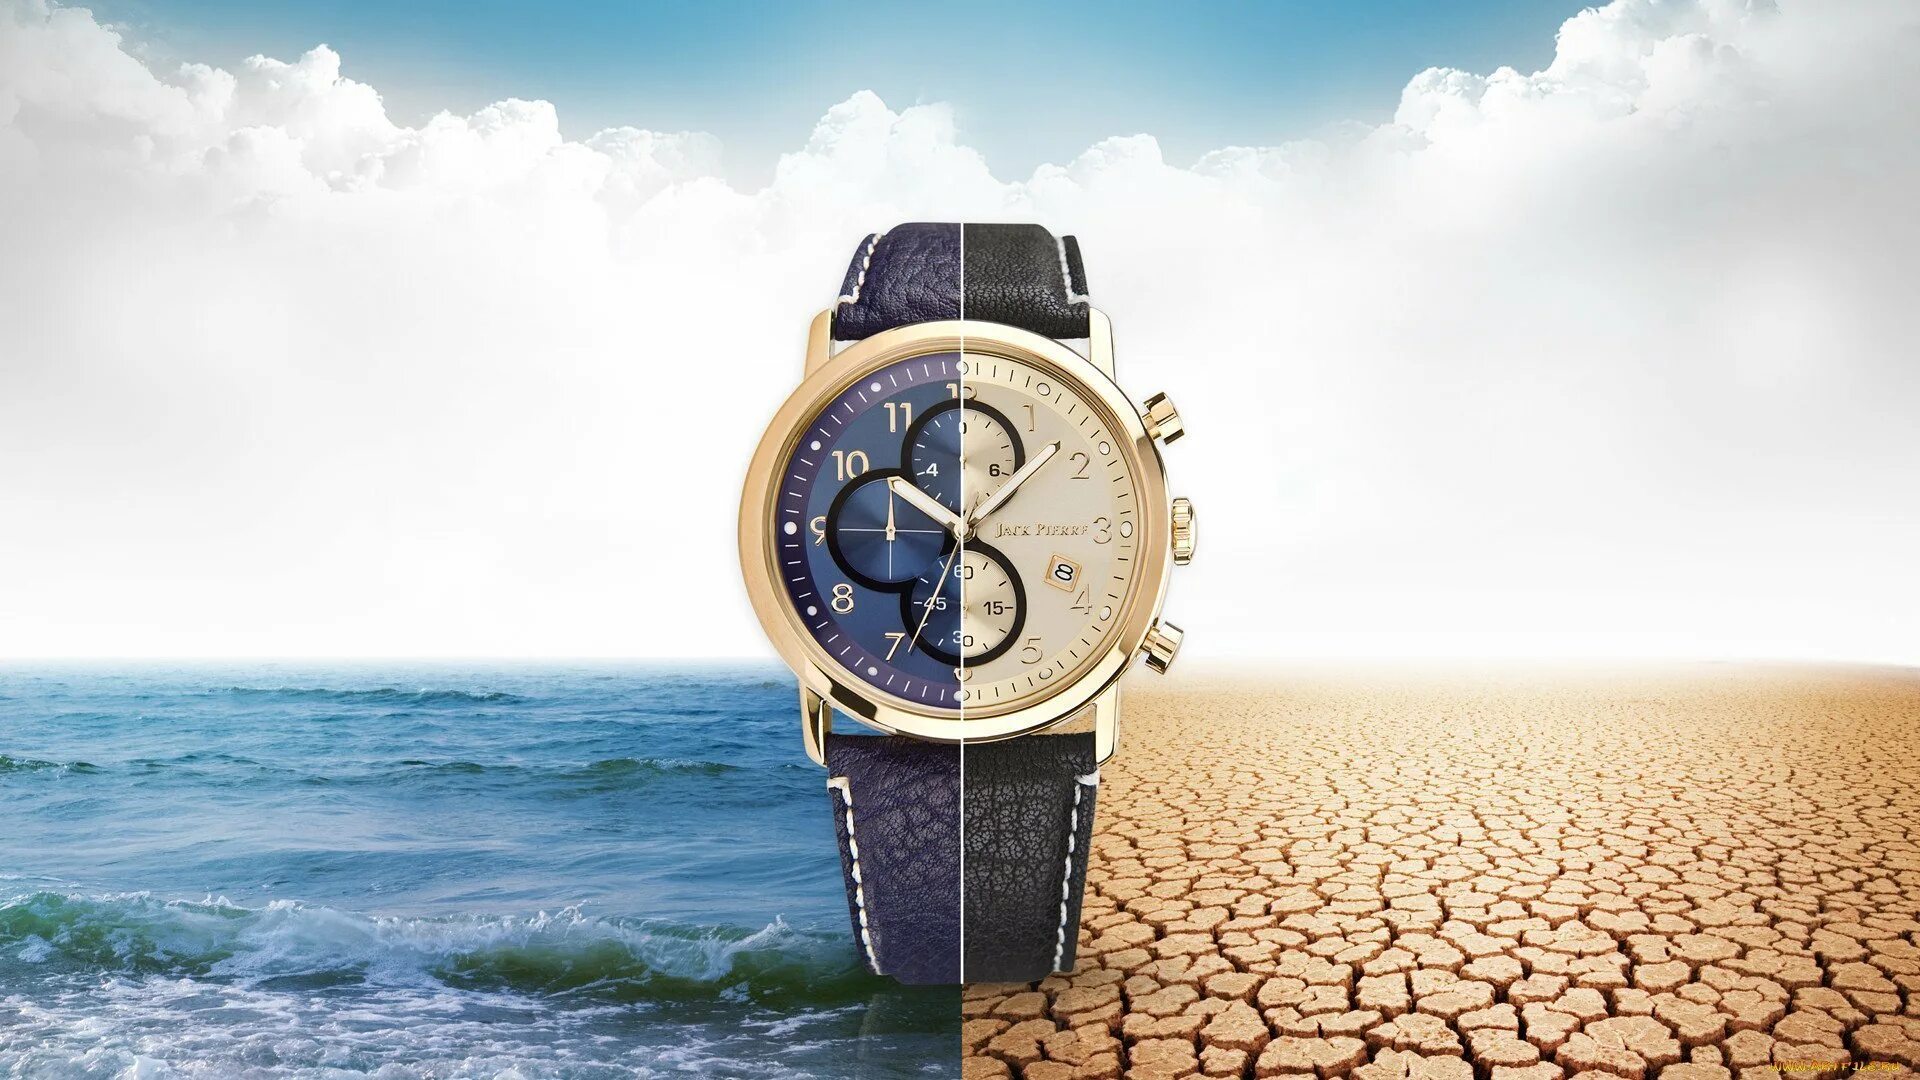 Https world of watch. Наручные часы баннер. Обои с часами. Швейцарские часы. Красивый фон с часами.